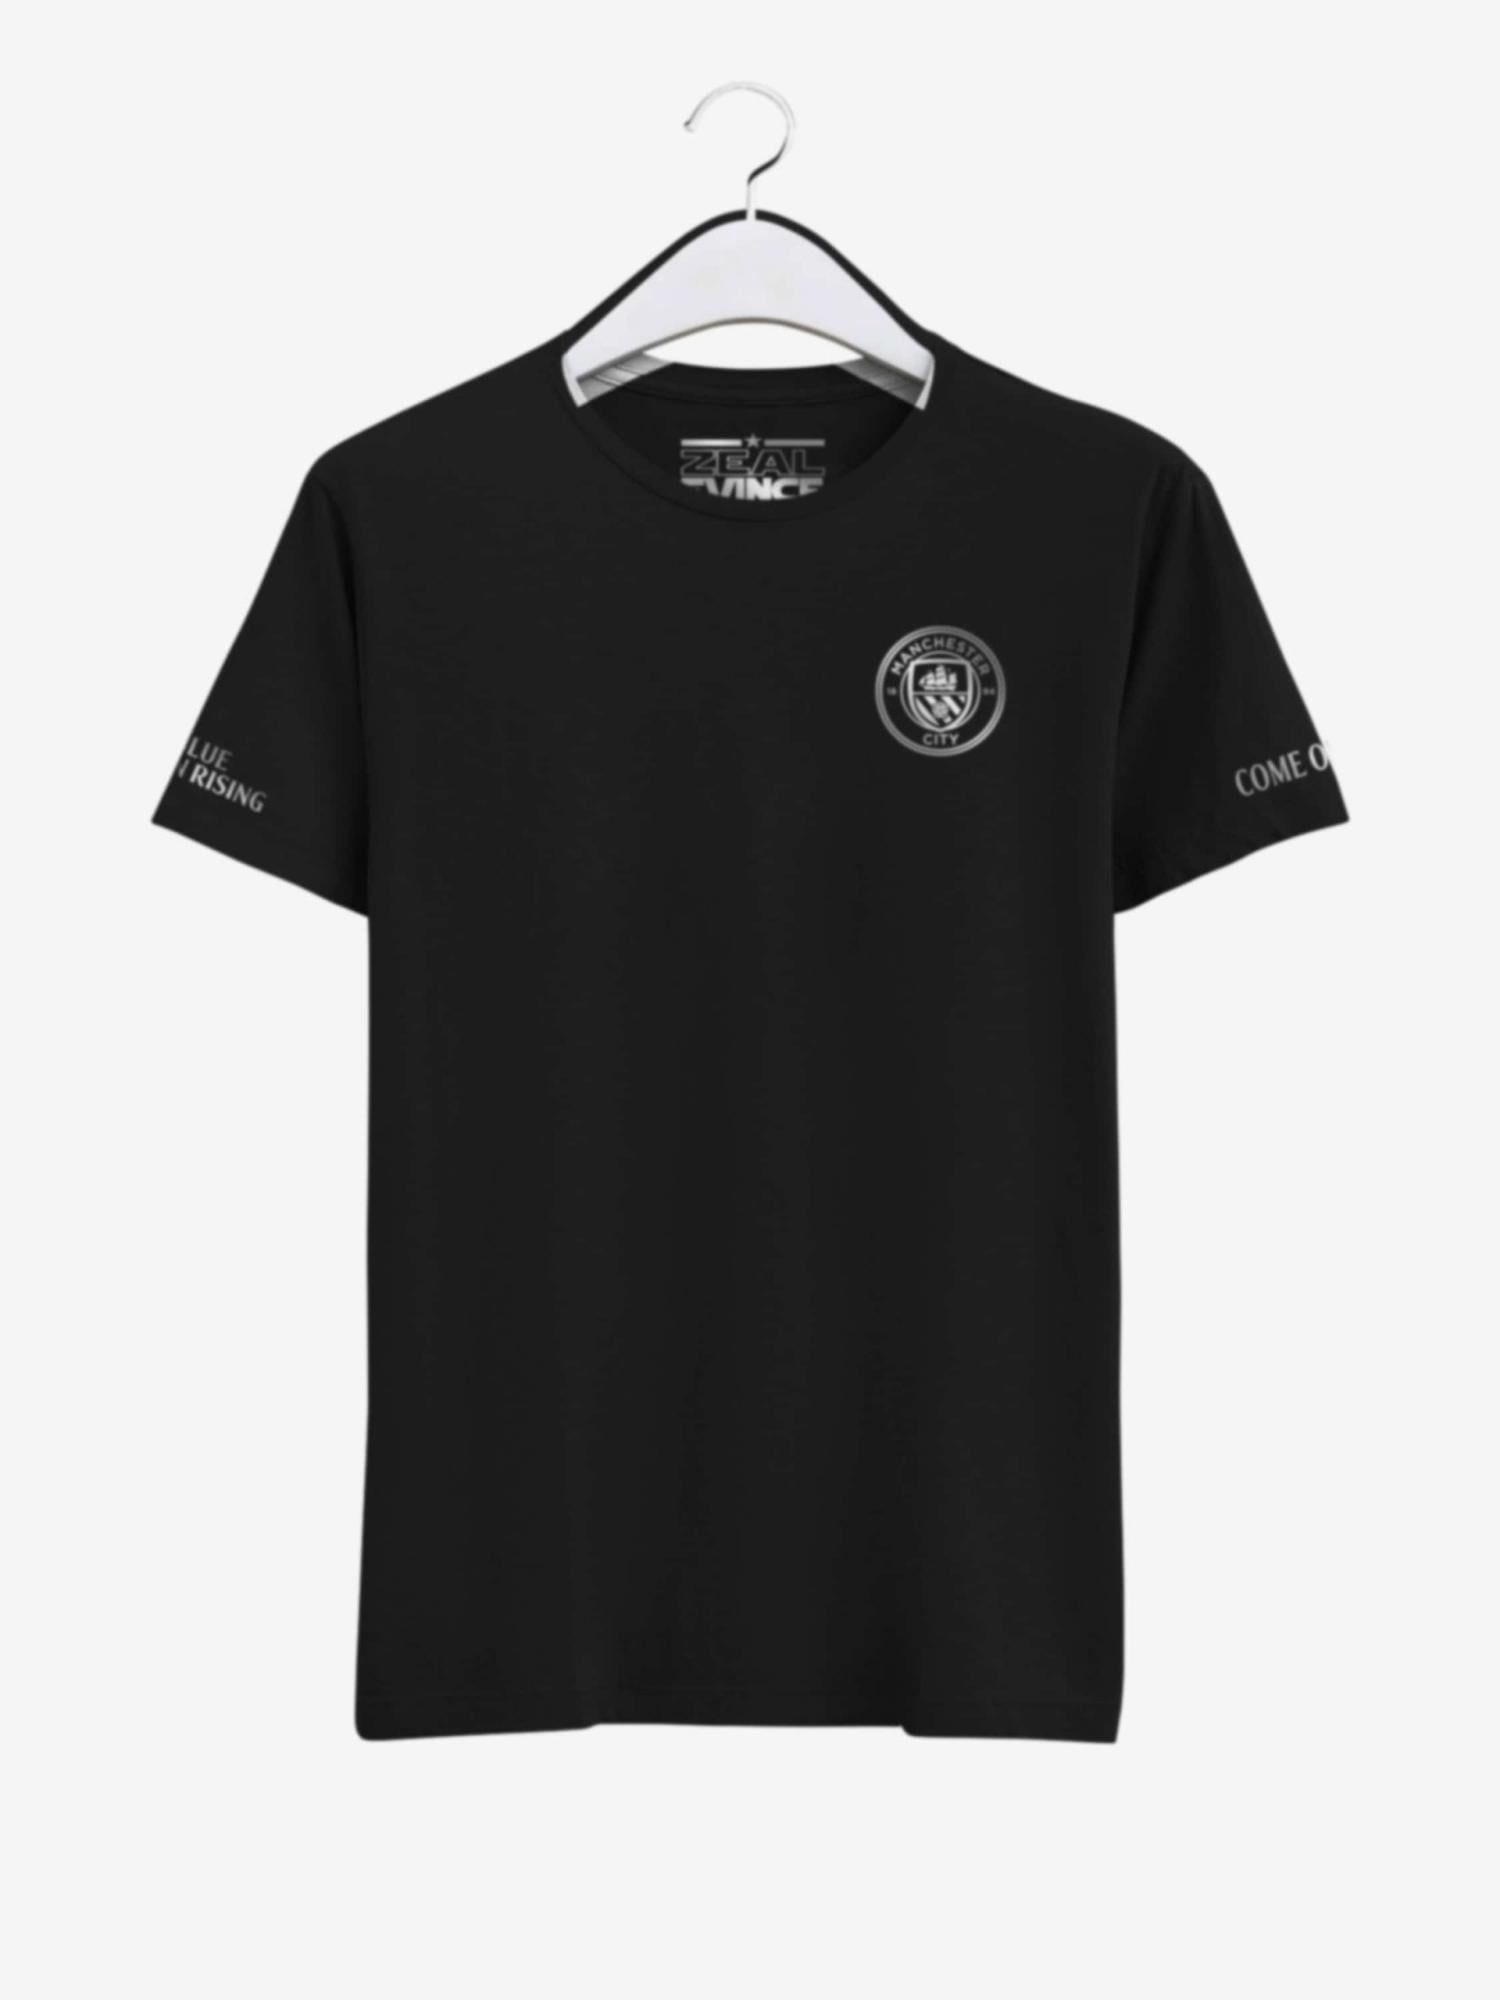 Manchester-City-Silver-Crest-Black-Round-Neck-T-Shirt-Front-2